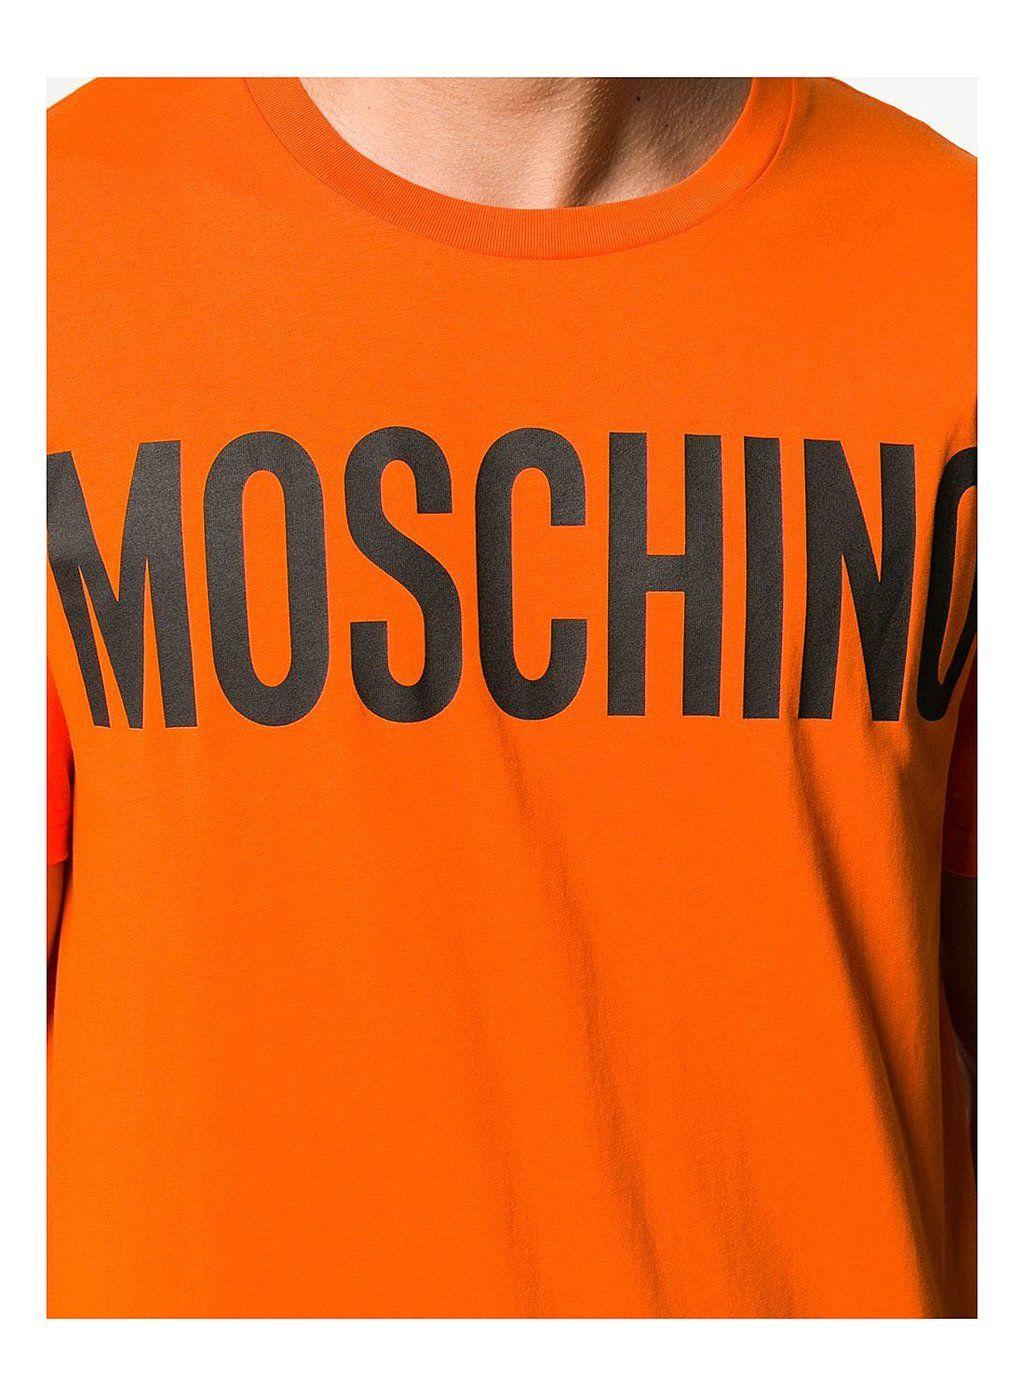 Orange Clothing Logo - Moschino Moschino Classic Logo Tee. Philip Browne Menswear